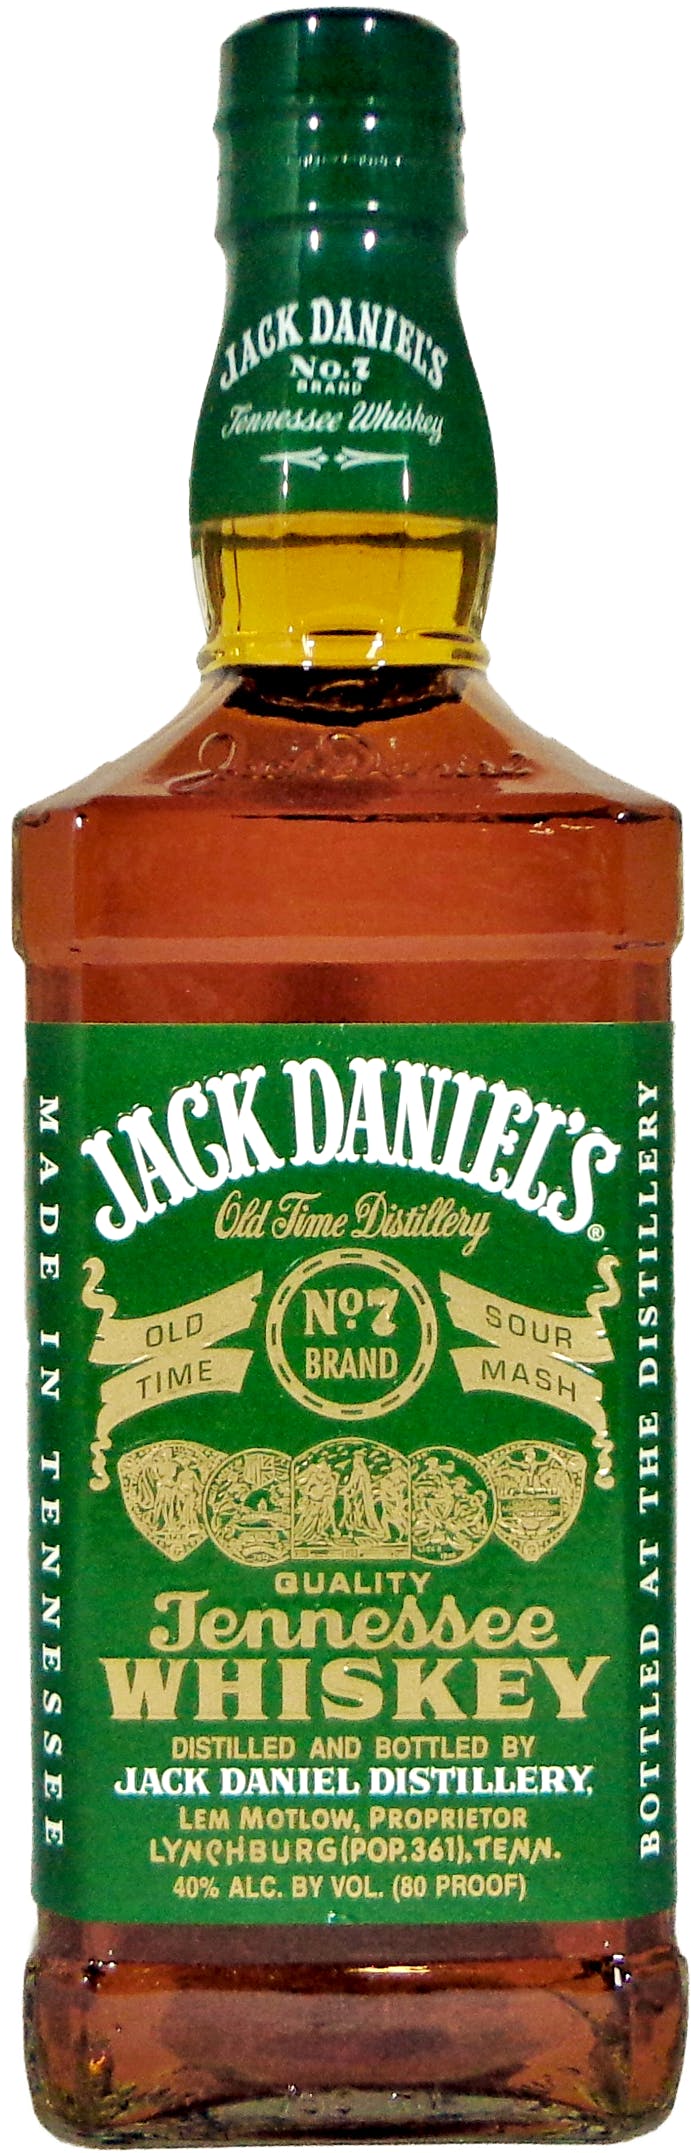 Jack Daniels by East Imperial